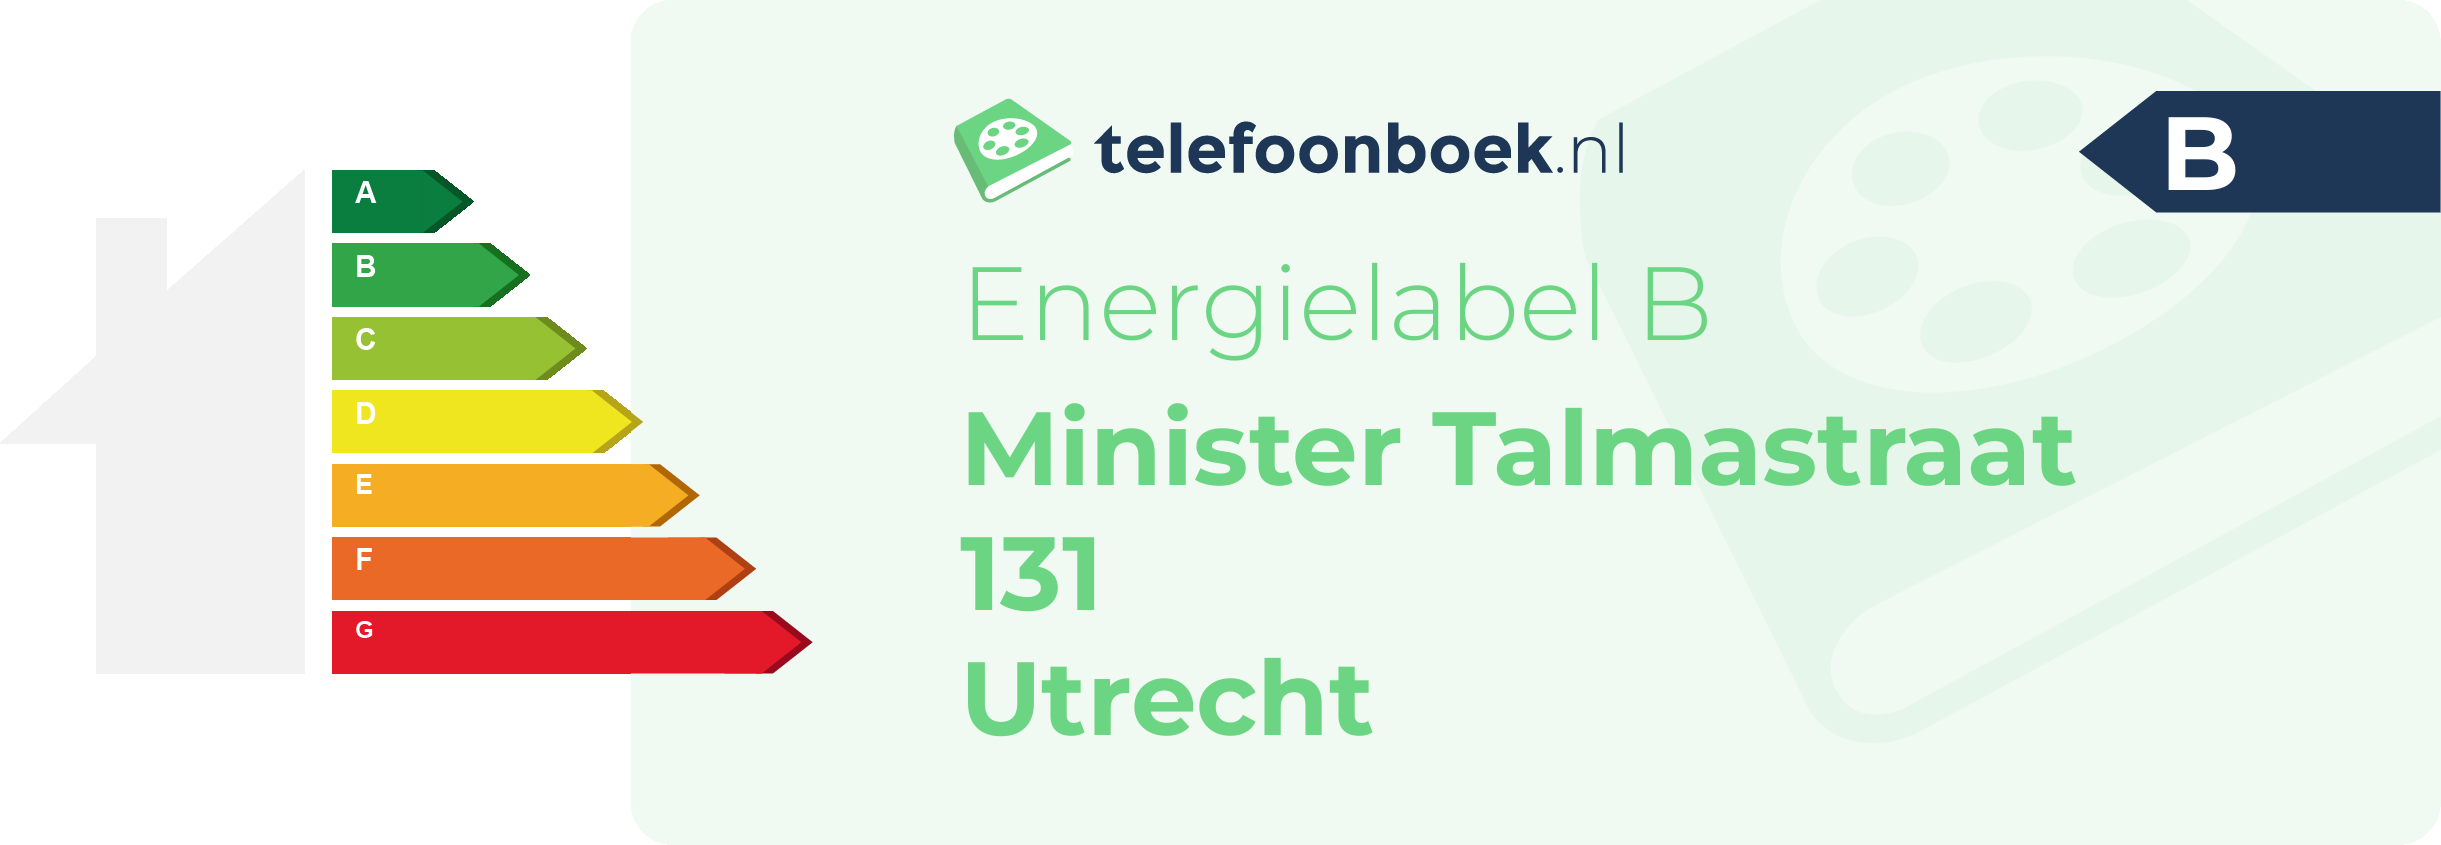 Energielabel Minister Talmastraat 131 Utrecht